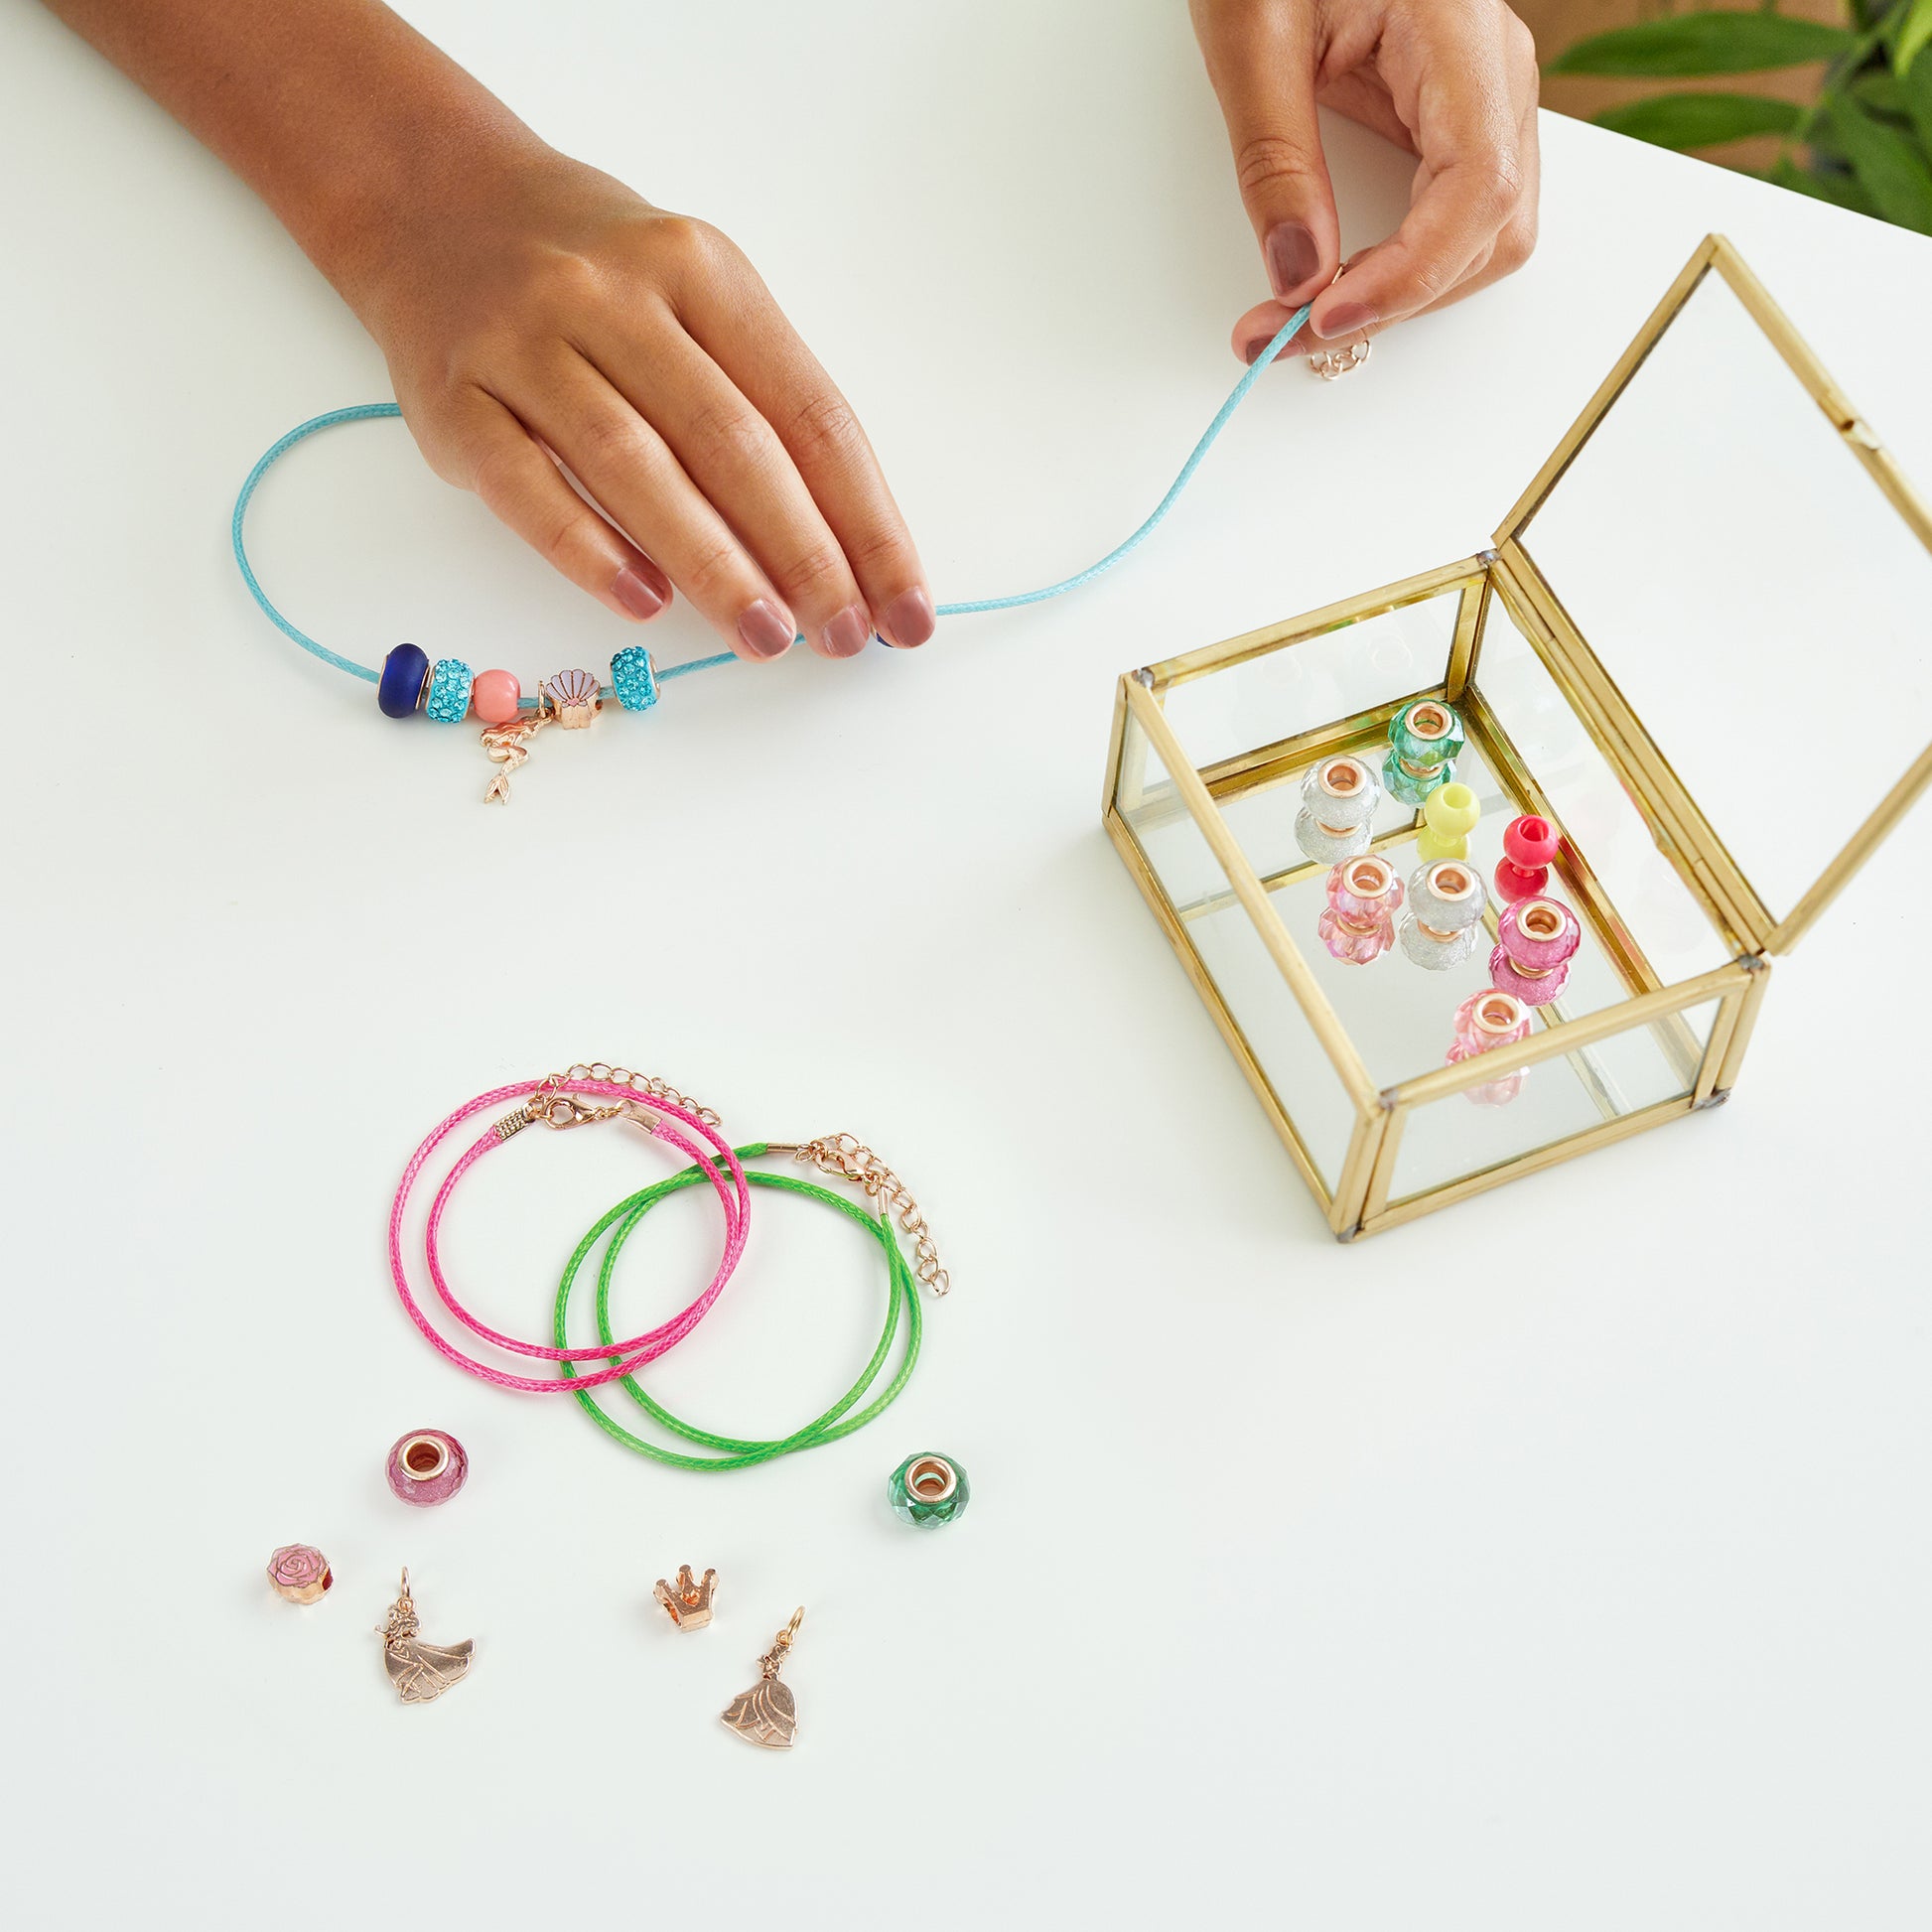  Make It Real Disney Princess 2 in 1 Deluxe Royal Jewels & Gems  - Disney Princess Craft Kit with Disney Charms & Beads - Disney Princess  Jewelry Making Kit for Girls